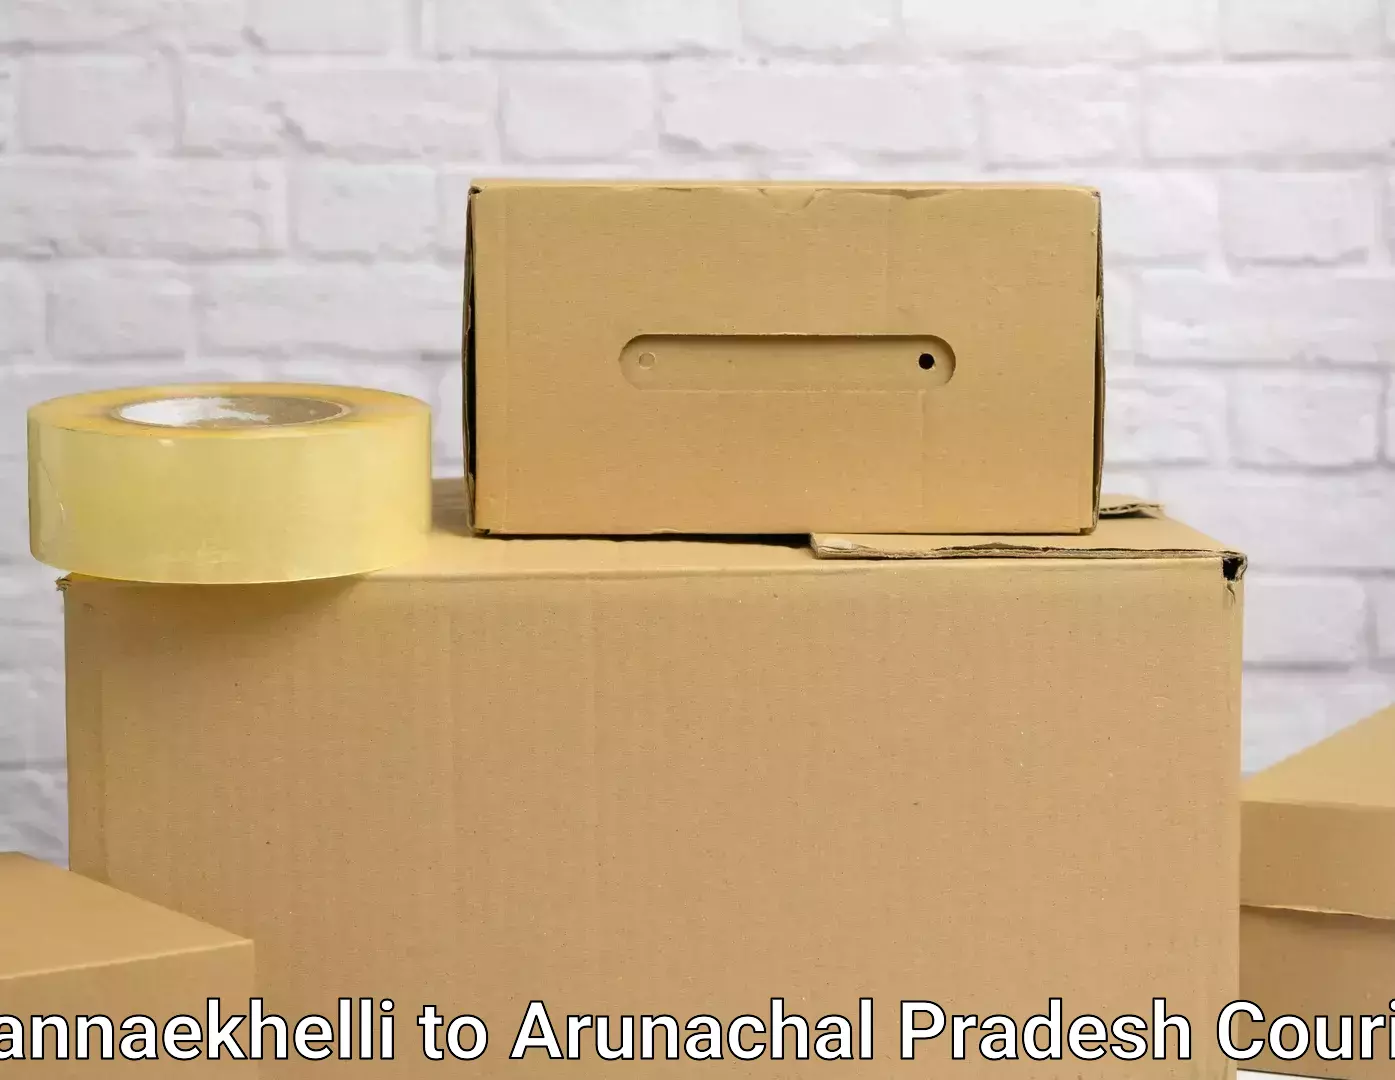 Budget-friendly movers Mannaekhelli to Lohit